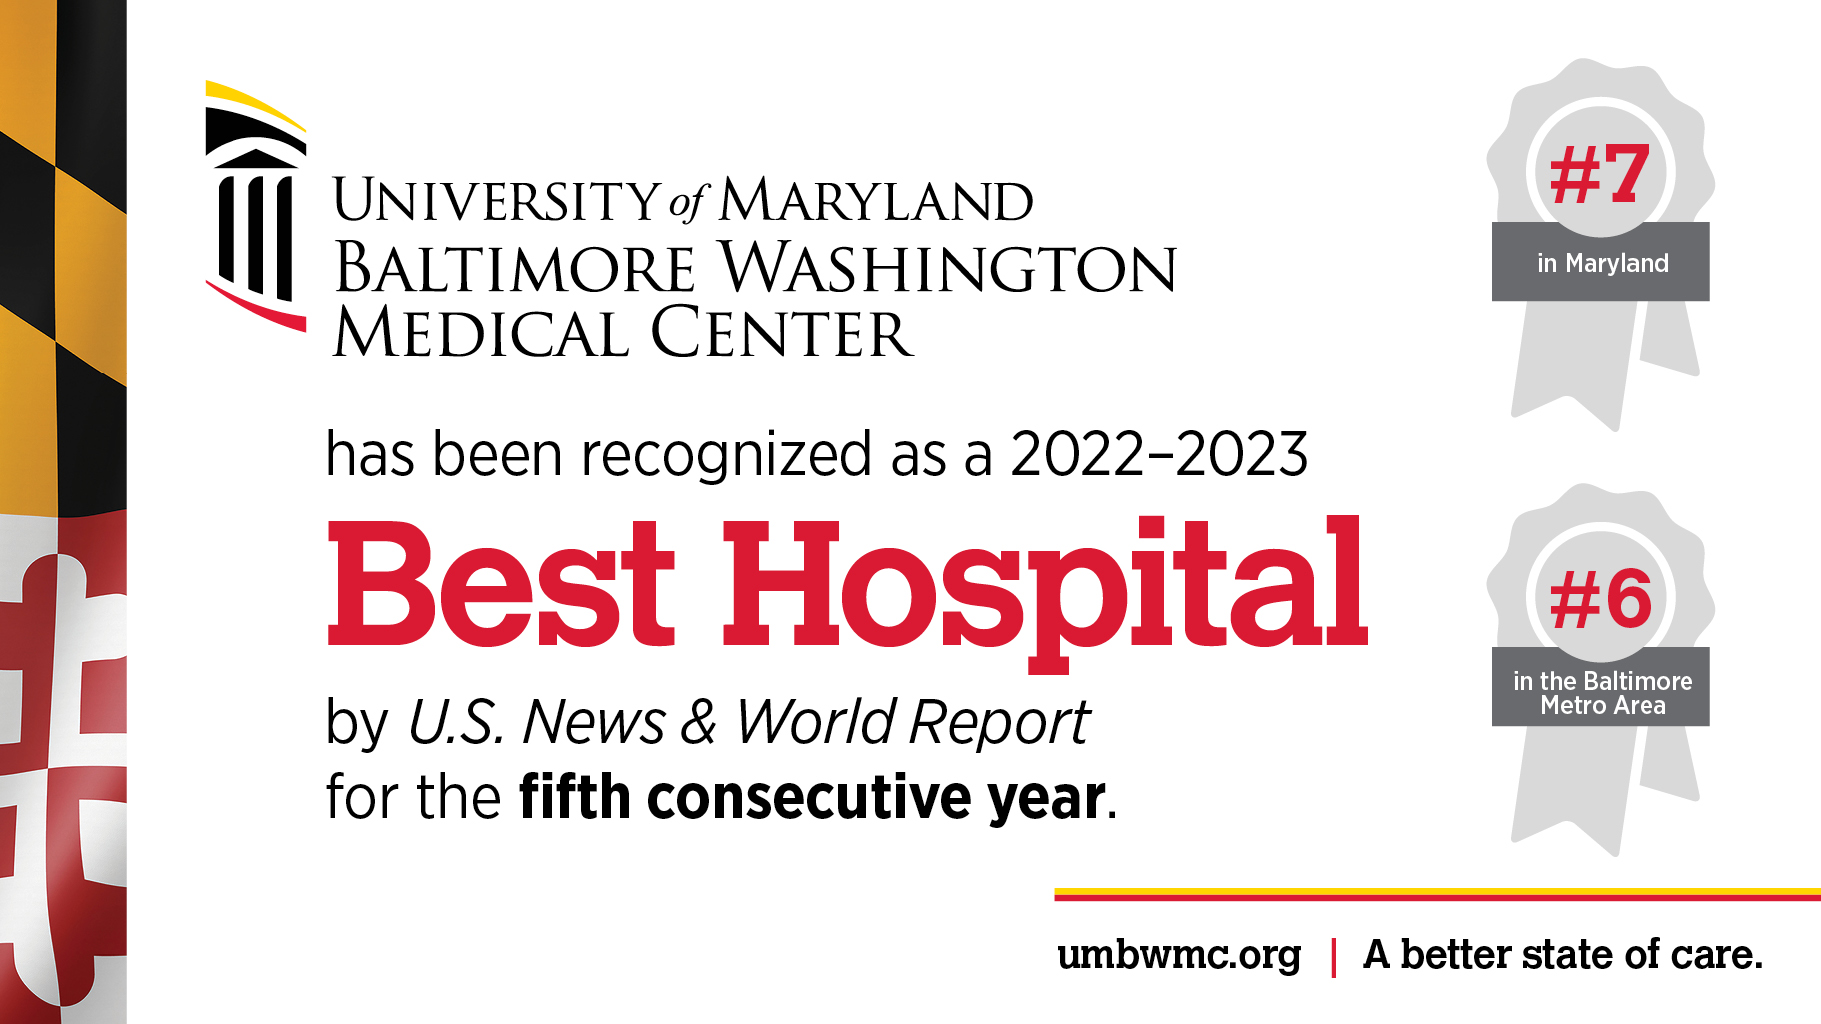 U.S. News and World Report Best Hospital